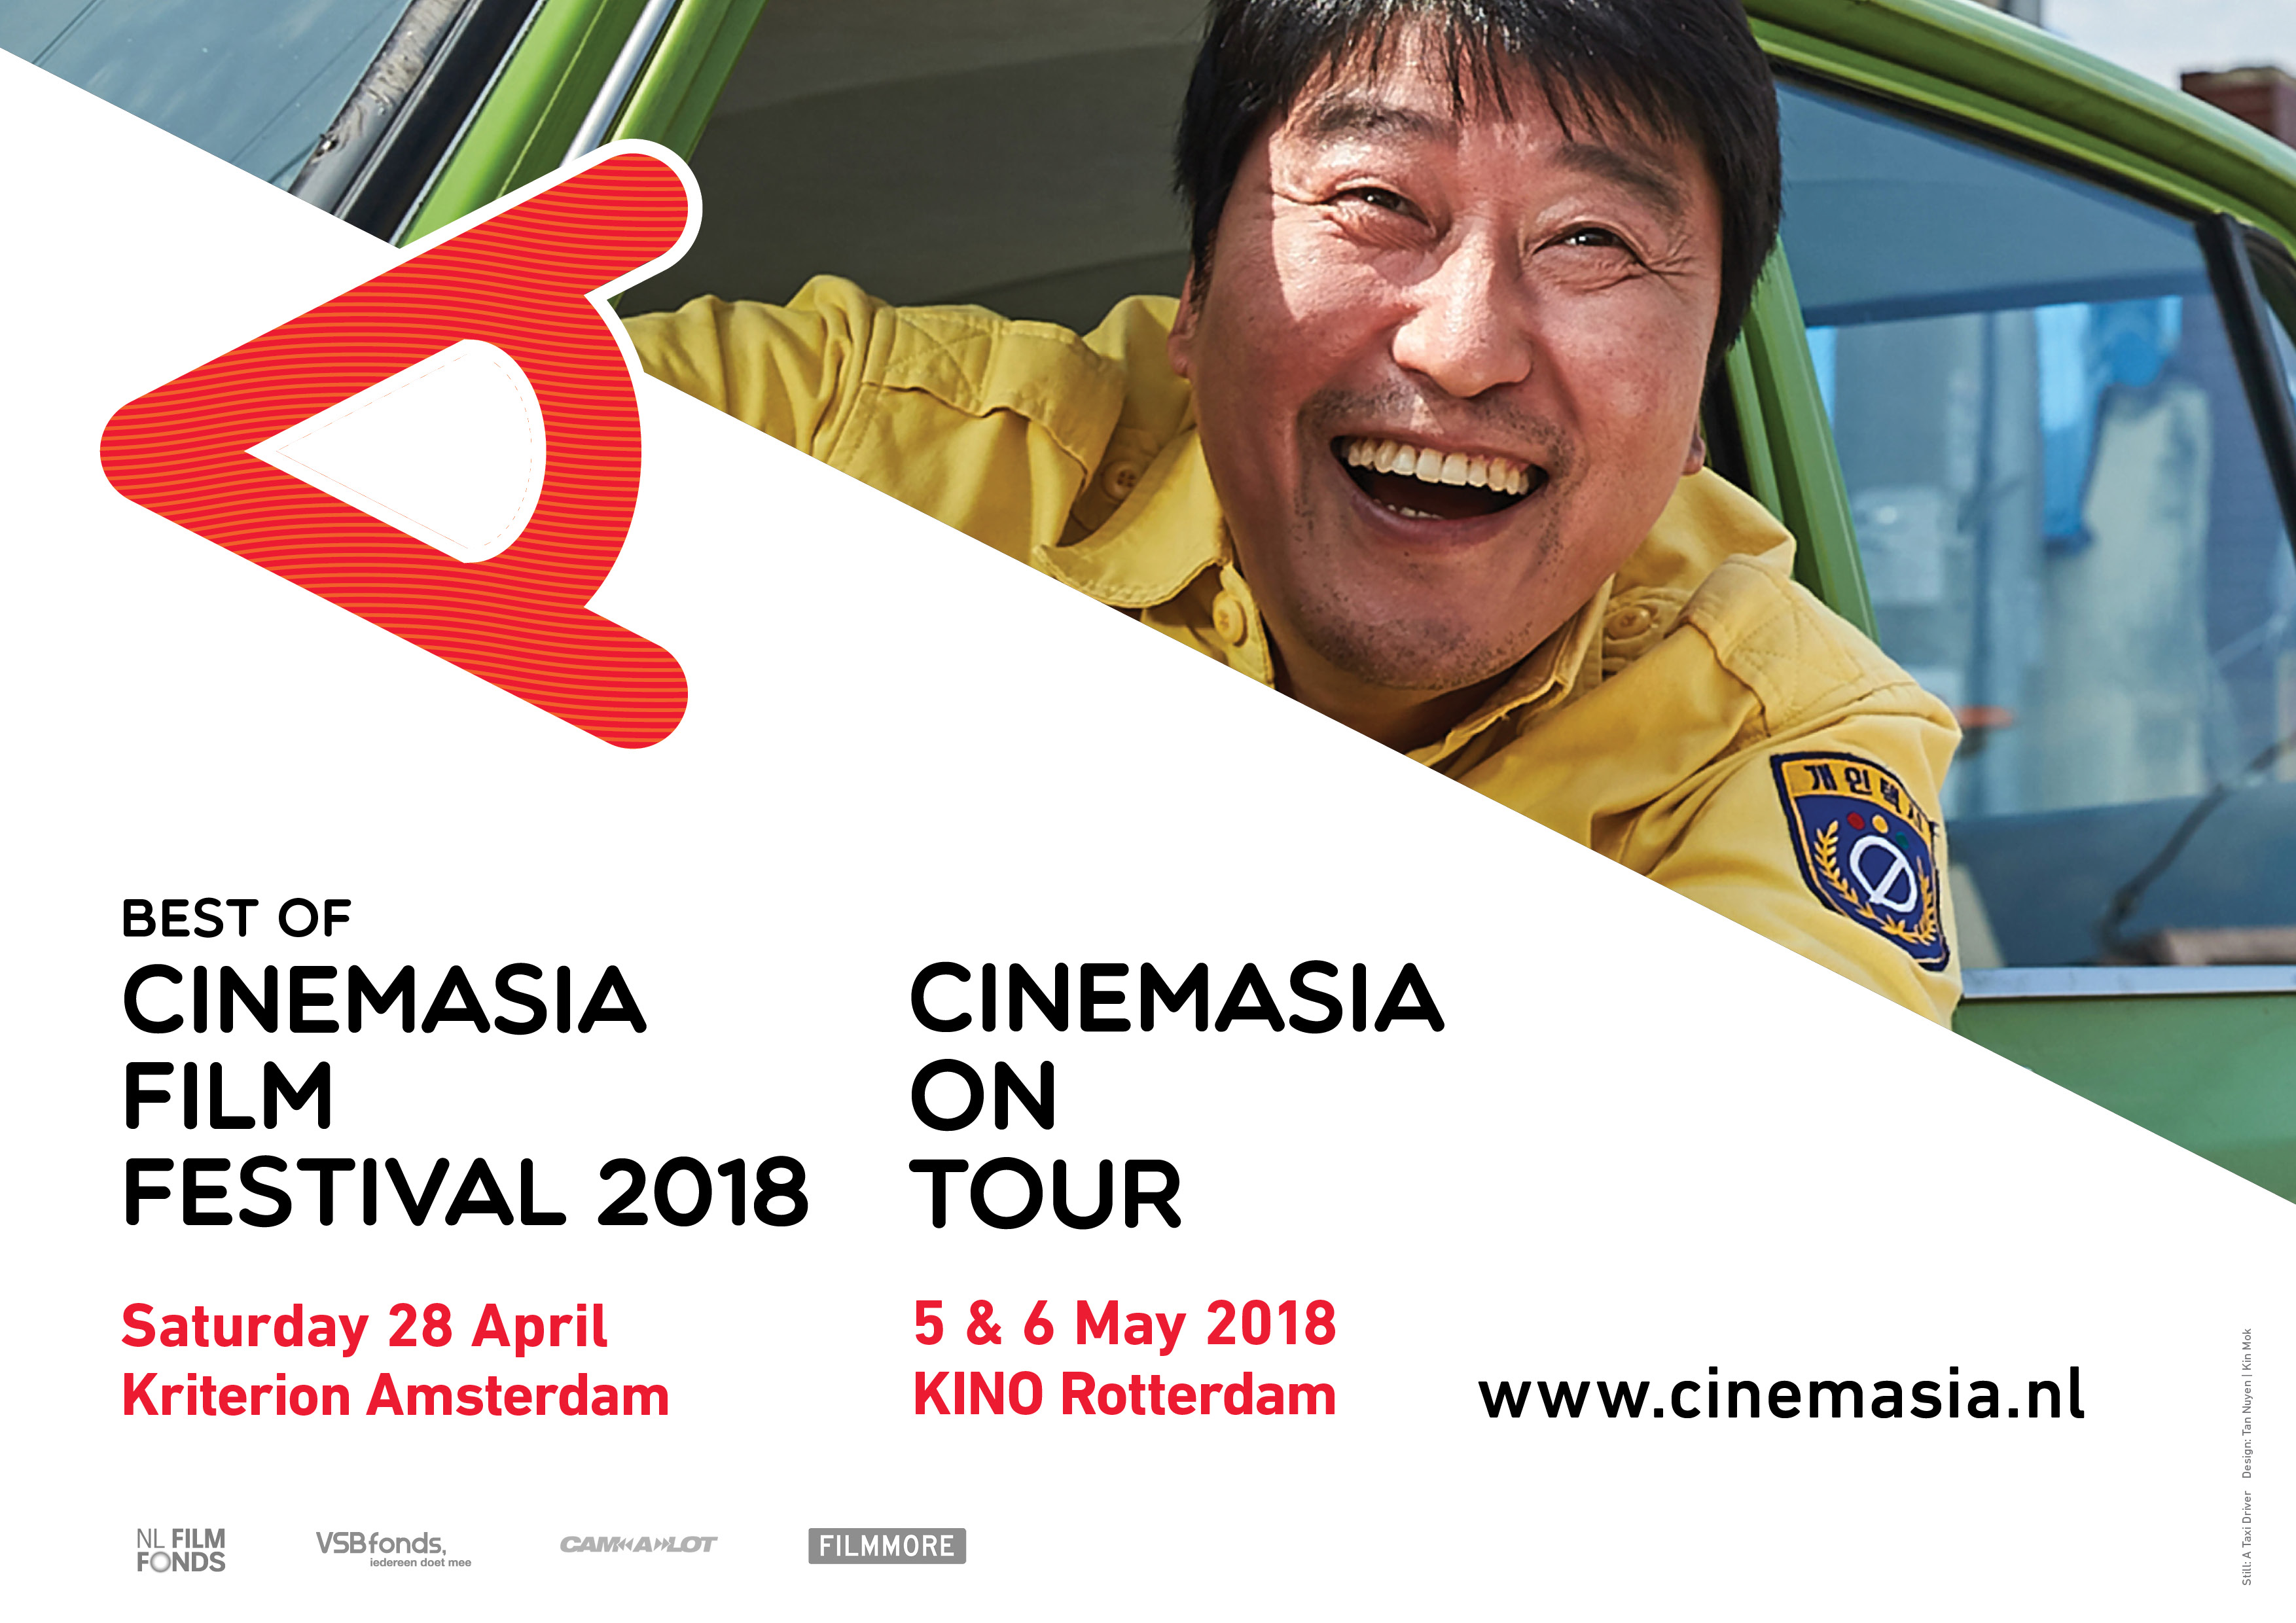 Best of CinemAsia 2018, CinemAsia on Tour & CinemAsia Rainbow Karaoke